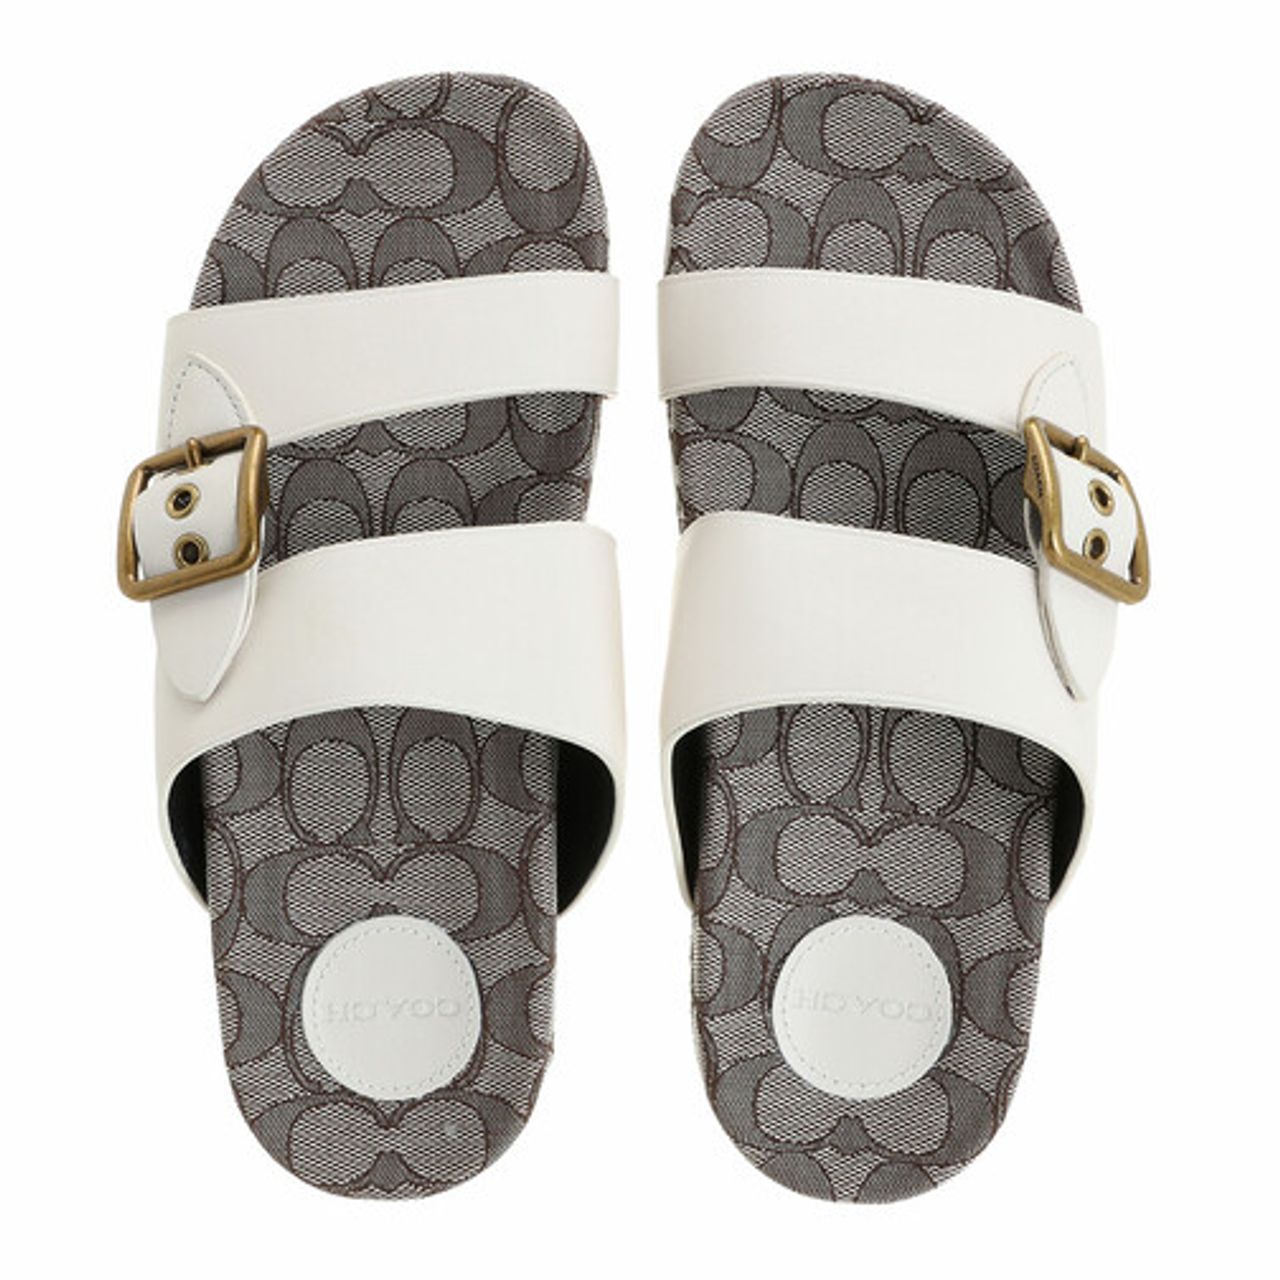 Coach Sandals - Addison Sandal - white - Sandals for ladies C8899 CHK 38,5  - Compare prices